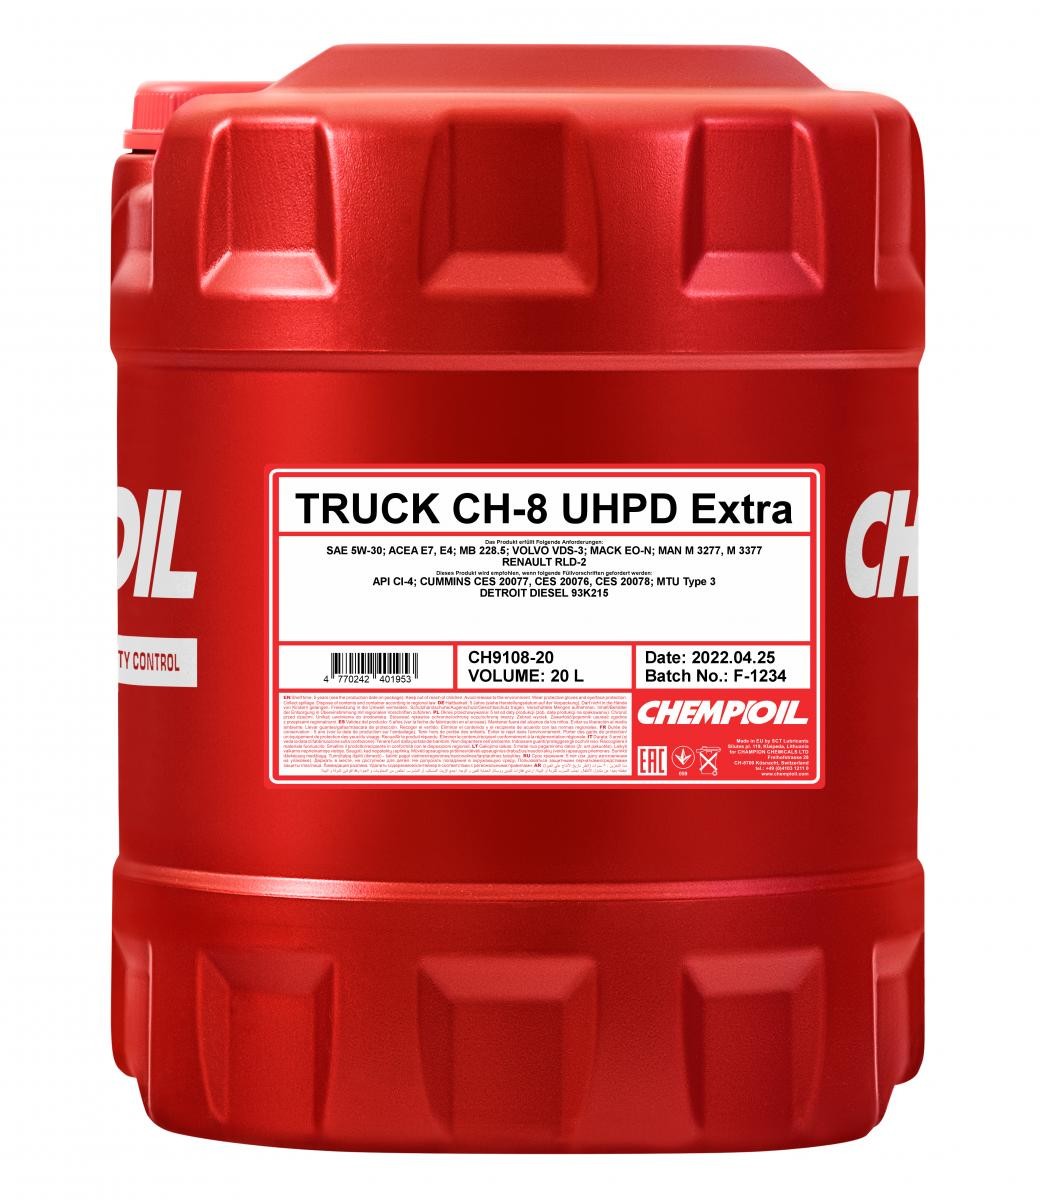 Buy Motor oil CHEMPIOIL petrol CH9108-20 Truck, Extra CH-8 5W-30, 20l